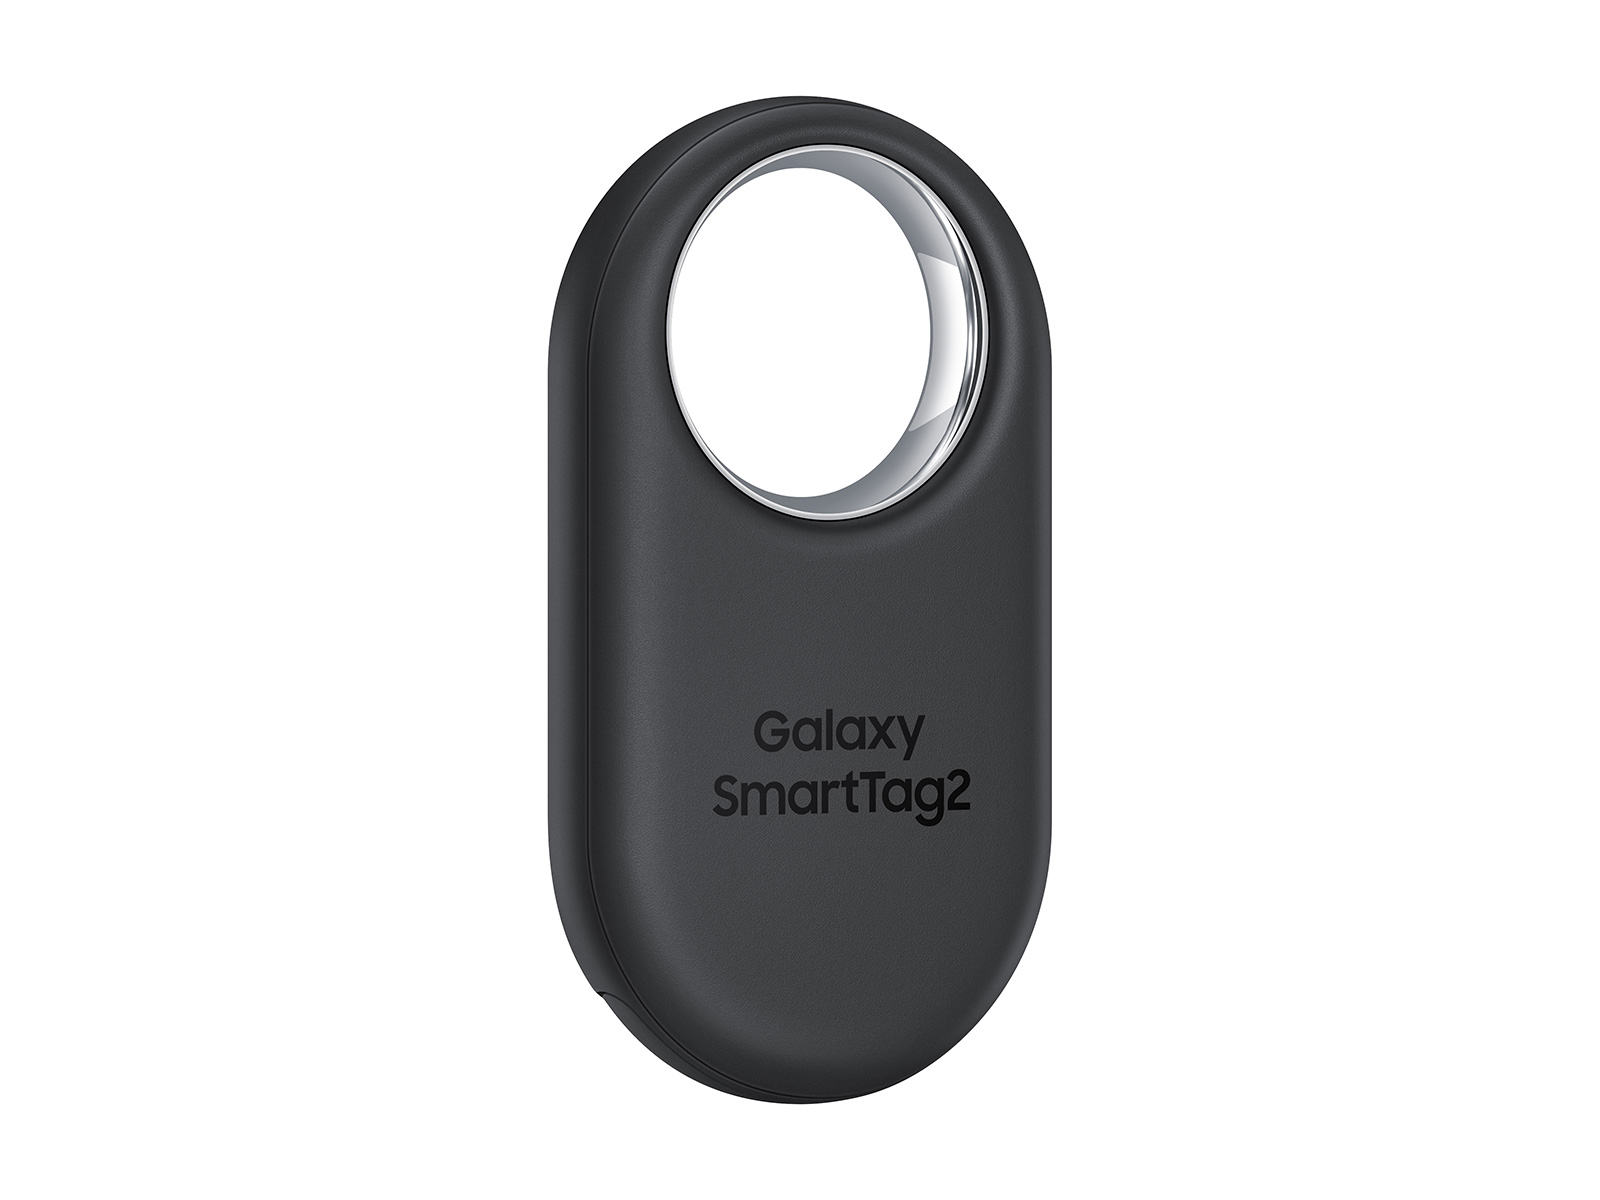 Thumbnail image of Galaxy SmartTag2, Black